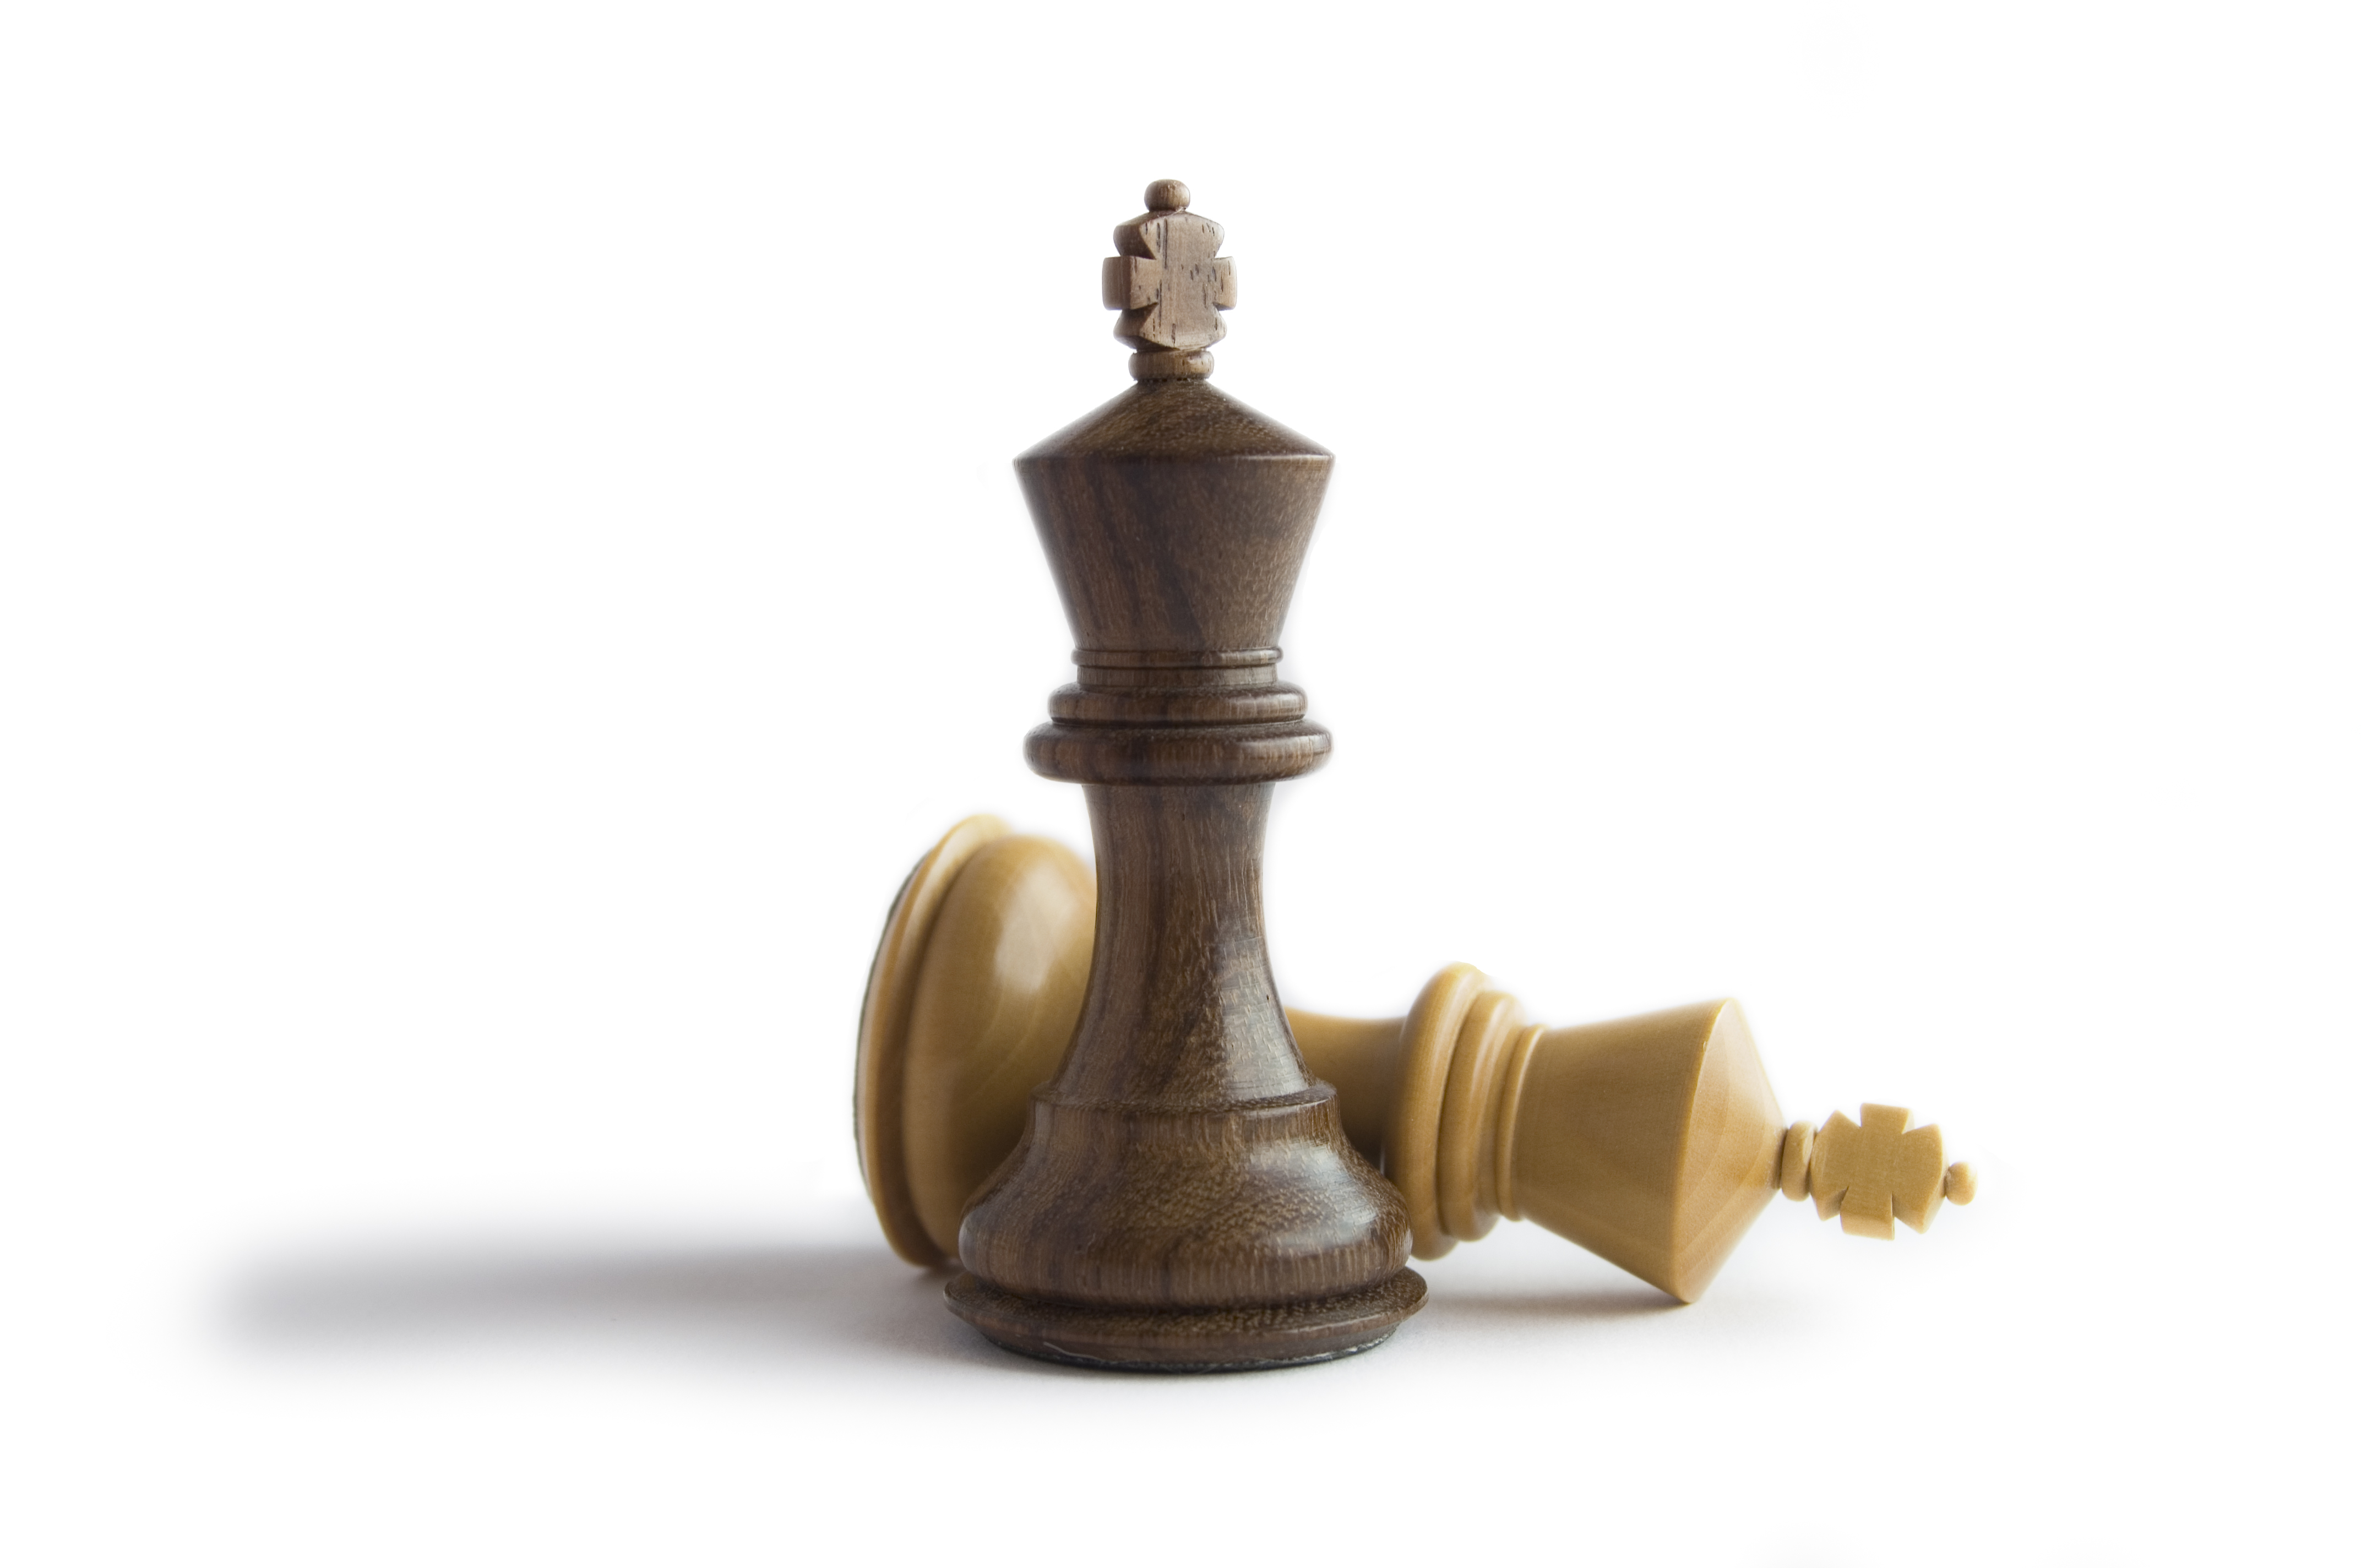 Chess Endgame Planning